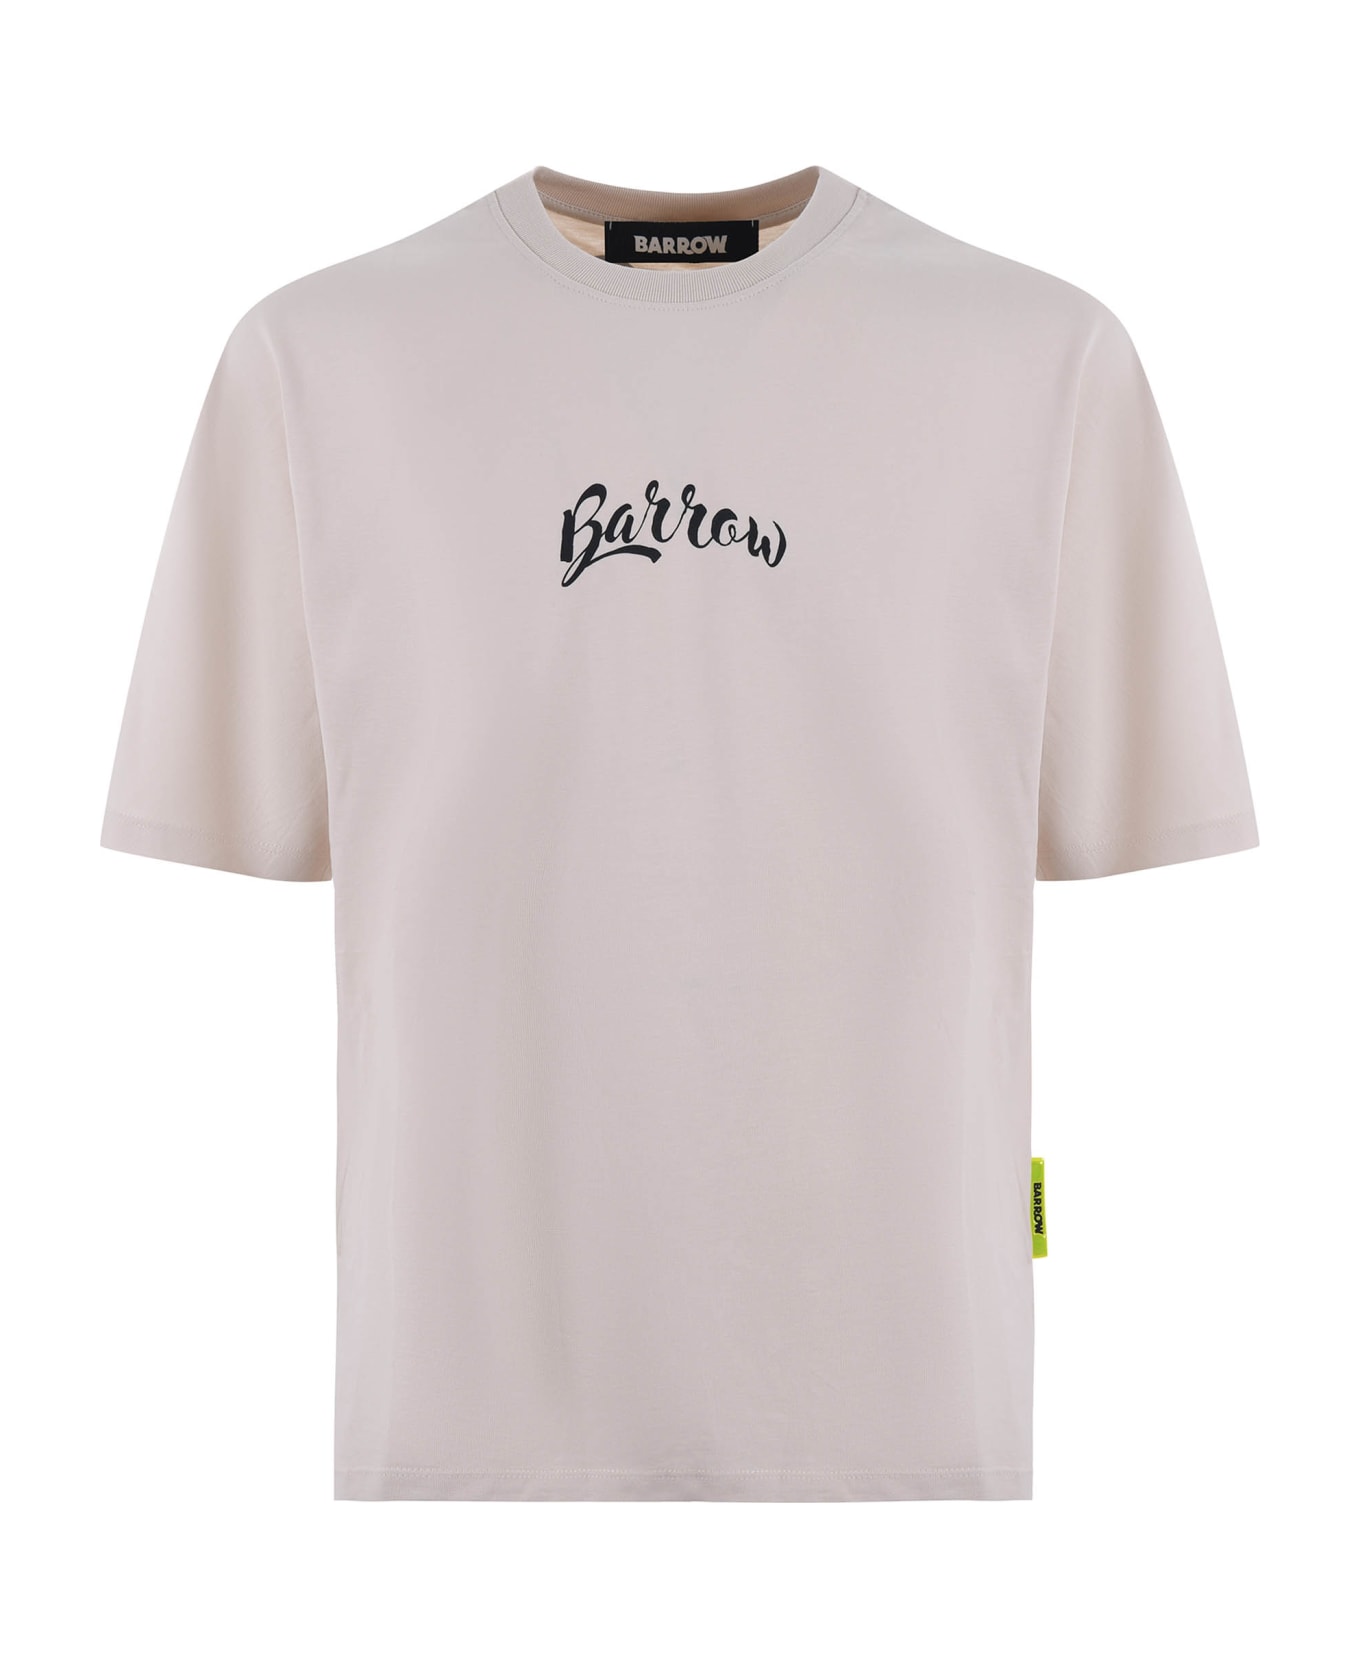 Barrow T-shirt - Sabbia